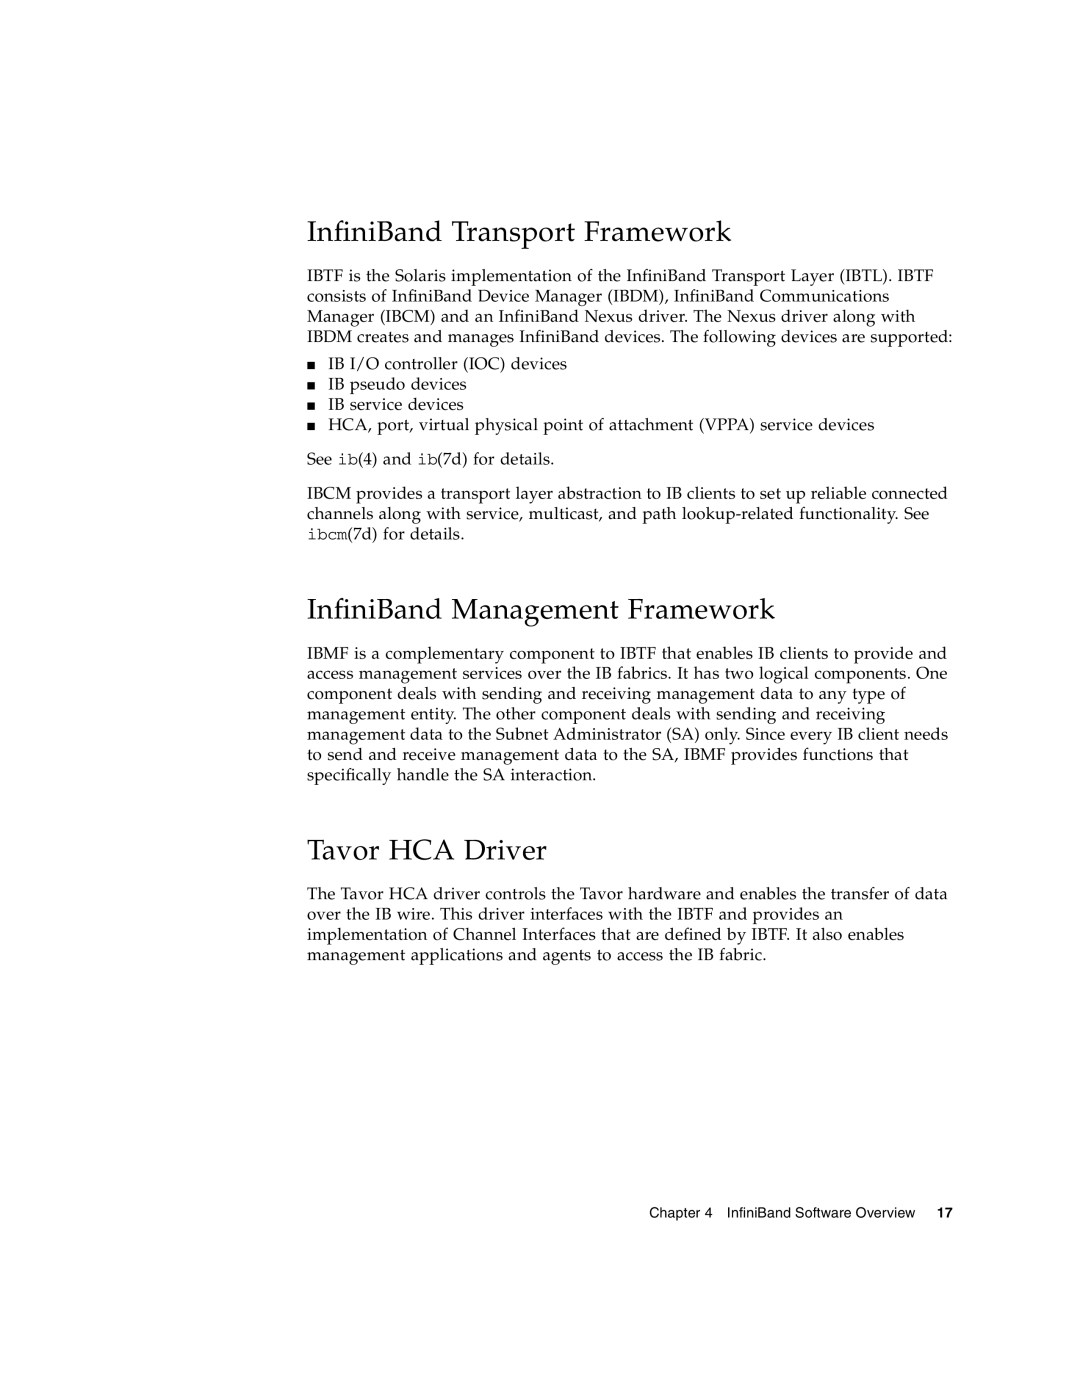 Sun Microsystems PCI manual InfiniBand Transport Framework, InfiniBand Management Framework, Tavor HCA Driver 